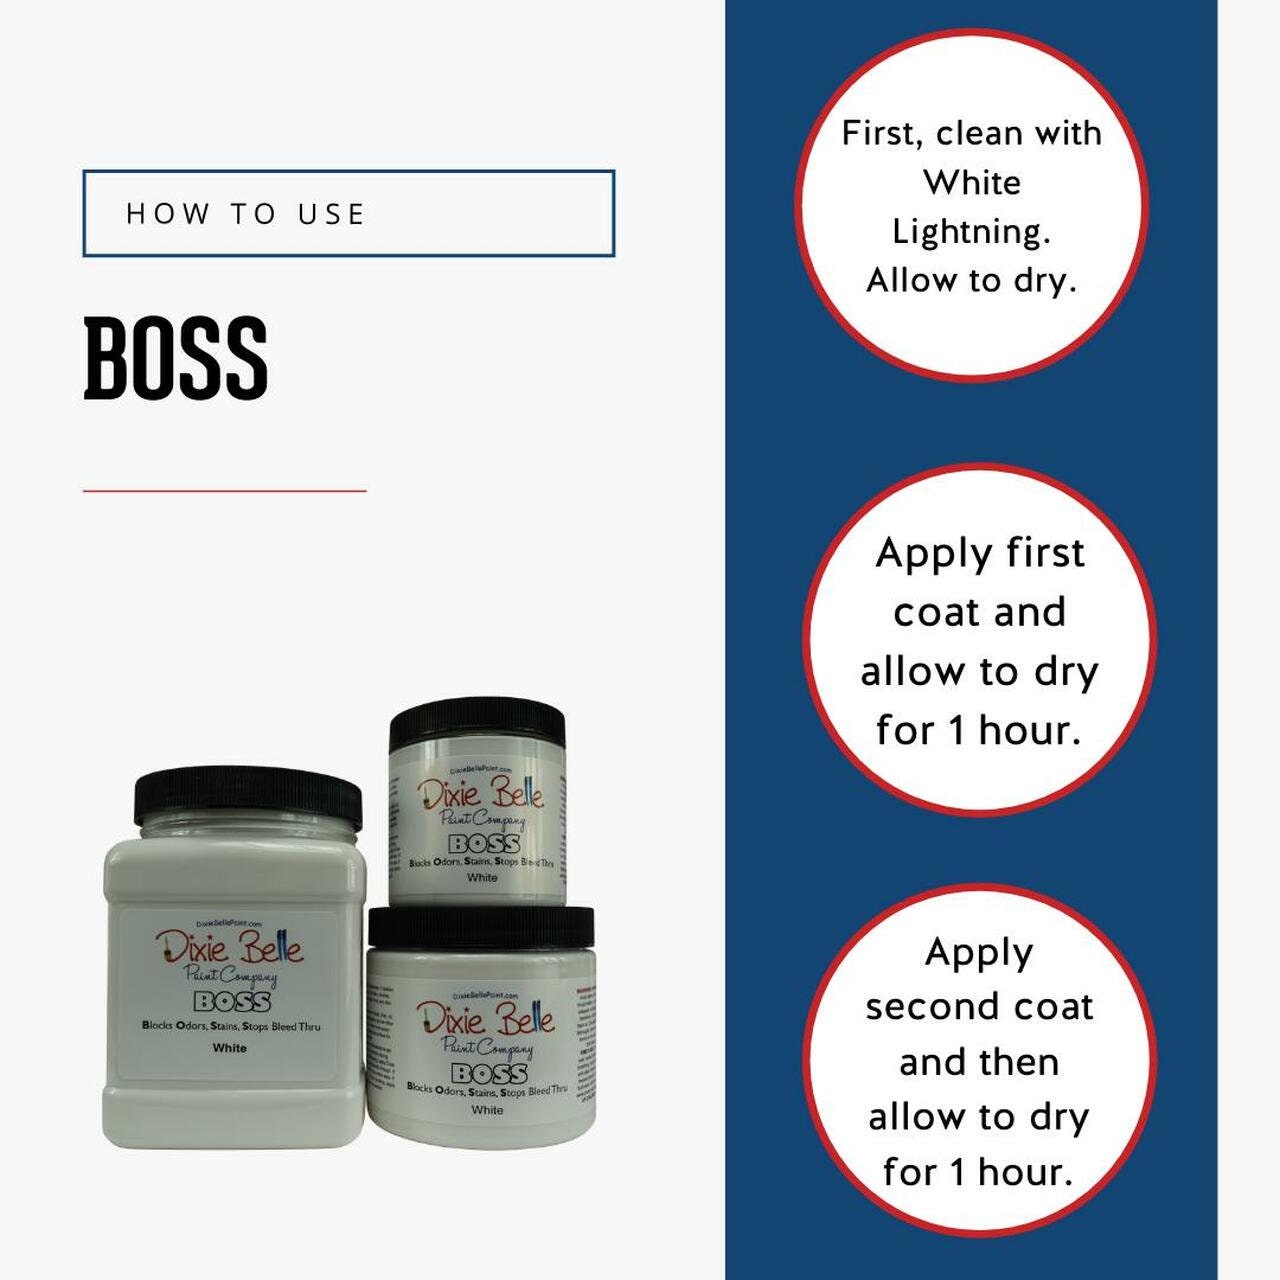 Dixie Belle BOSS - Same Day Shipping - primer blocks tannins stains odors - primer for furniture and cabinets - furniture primer - belleandbeau850